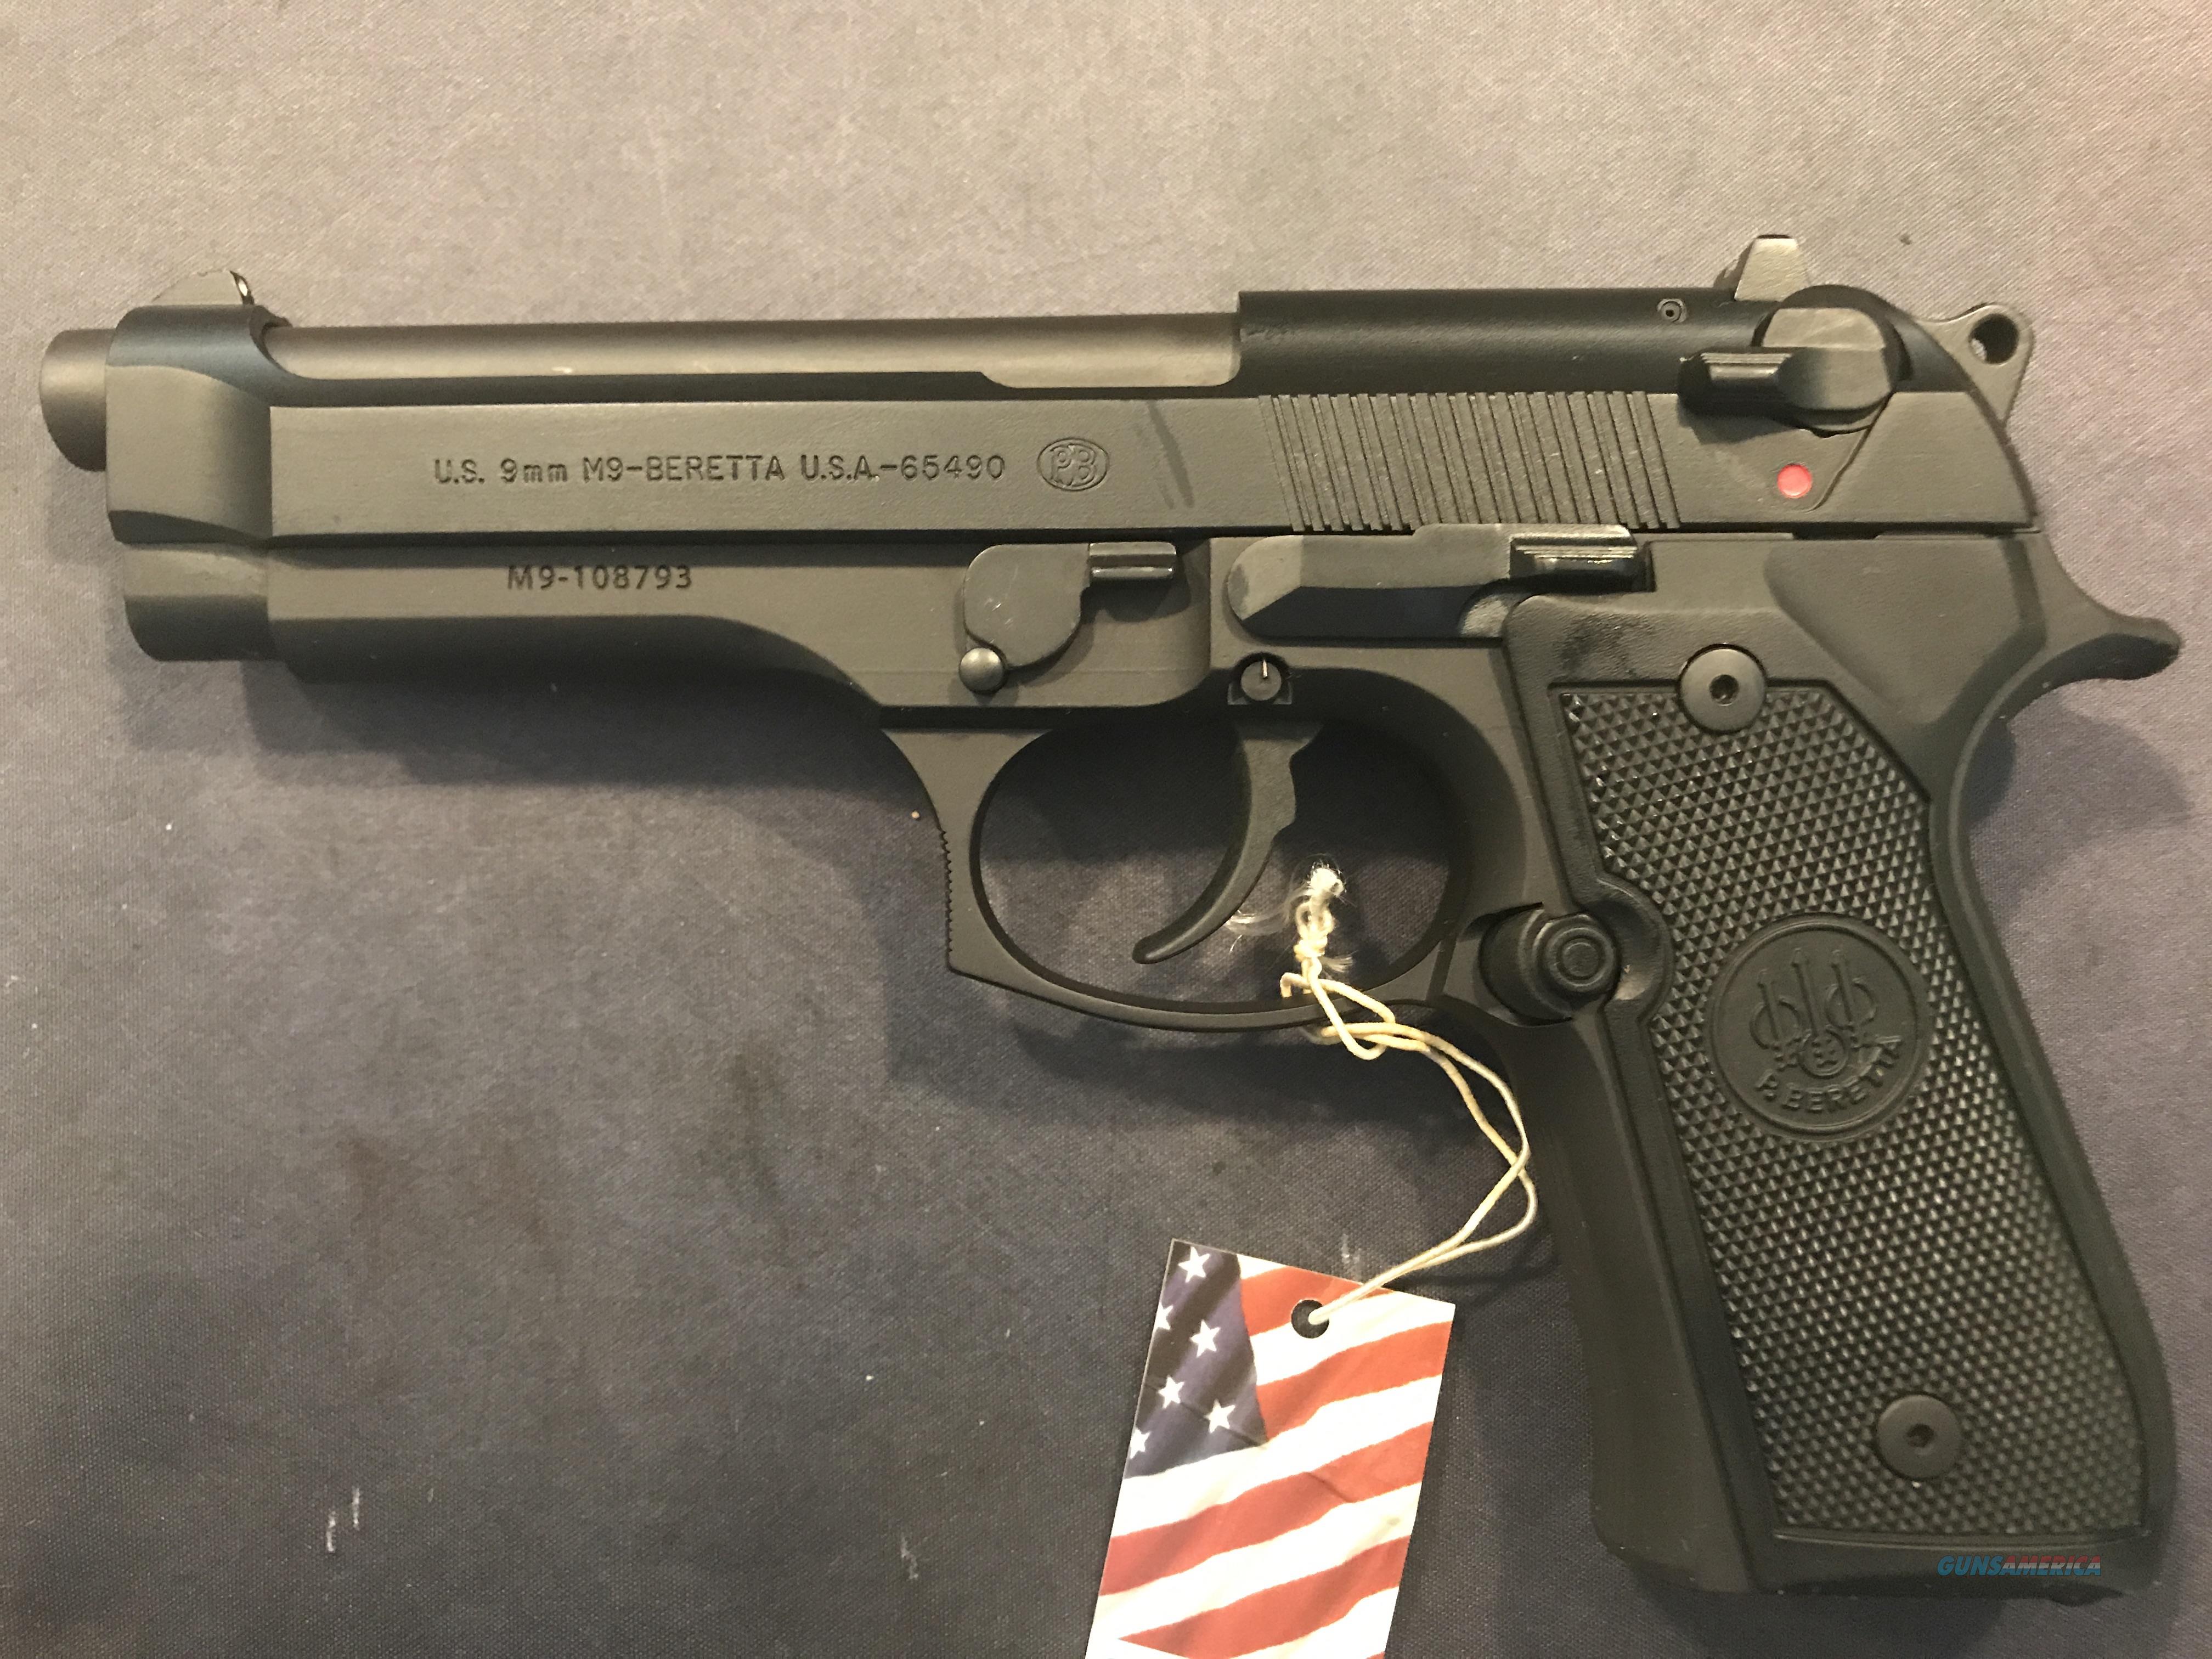 Beretta M9 9mm 15+1 Round Pistol Mo... for sale at Gunsamerica.com ...